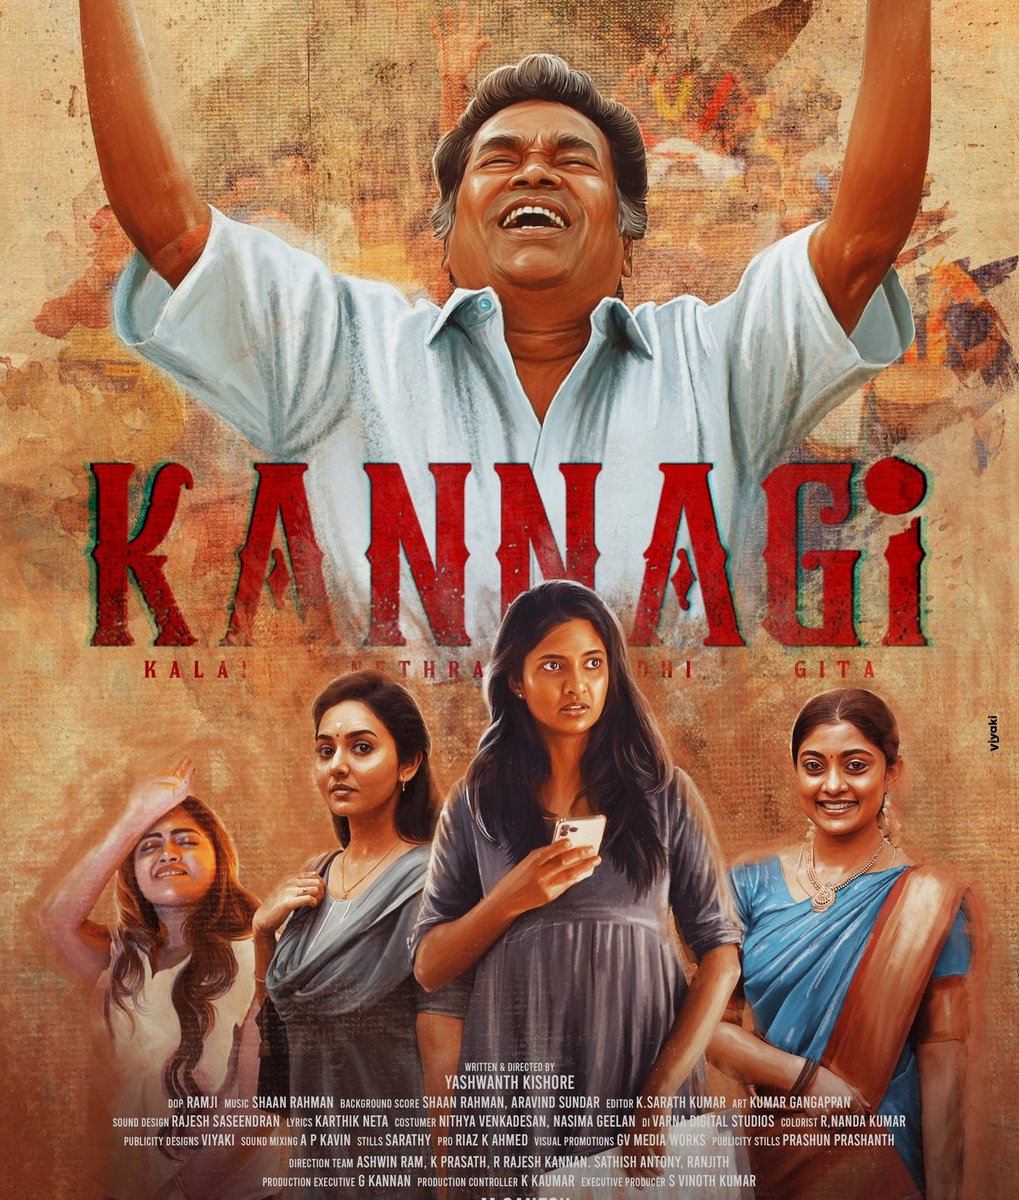 Hearing great things about the film #Kannagi All the best team for a Big Success at BoxOffice... Please do watch this film in Theatres... @iKeerthiPandian @shaanrahman @Ammu_Abhirami @vidya_pradeep01 @shaalinofficial @vetri_artist @adheshwar @Yechuofficial @ramji_ragebe1